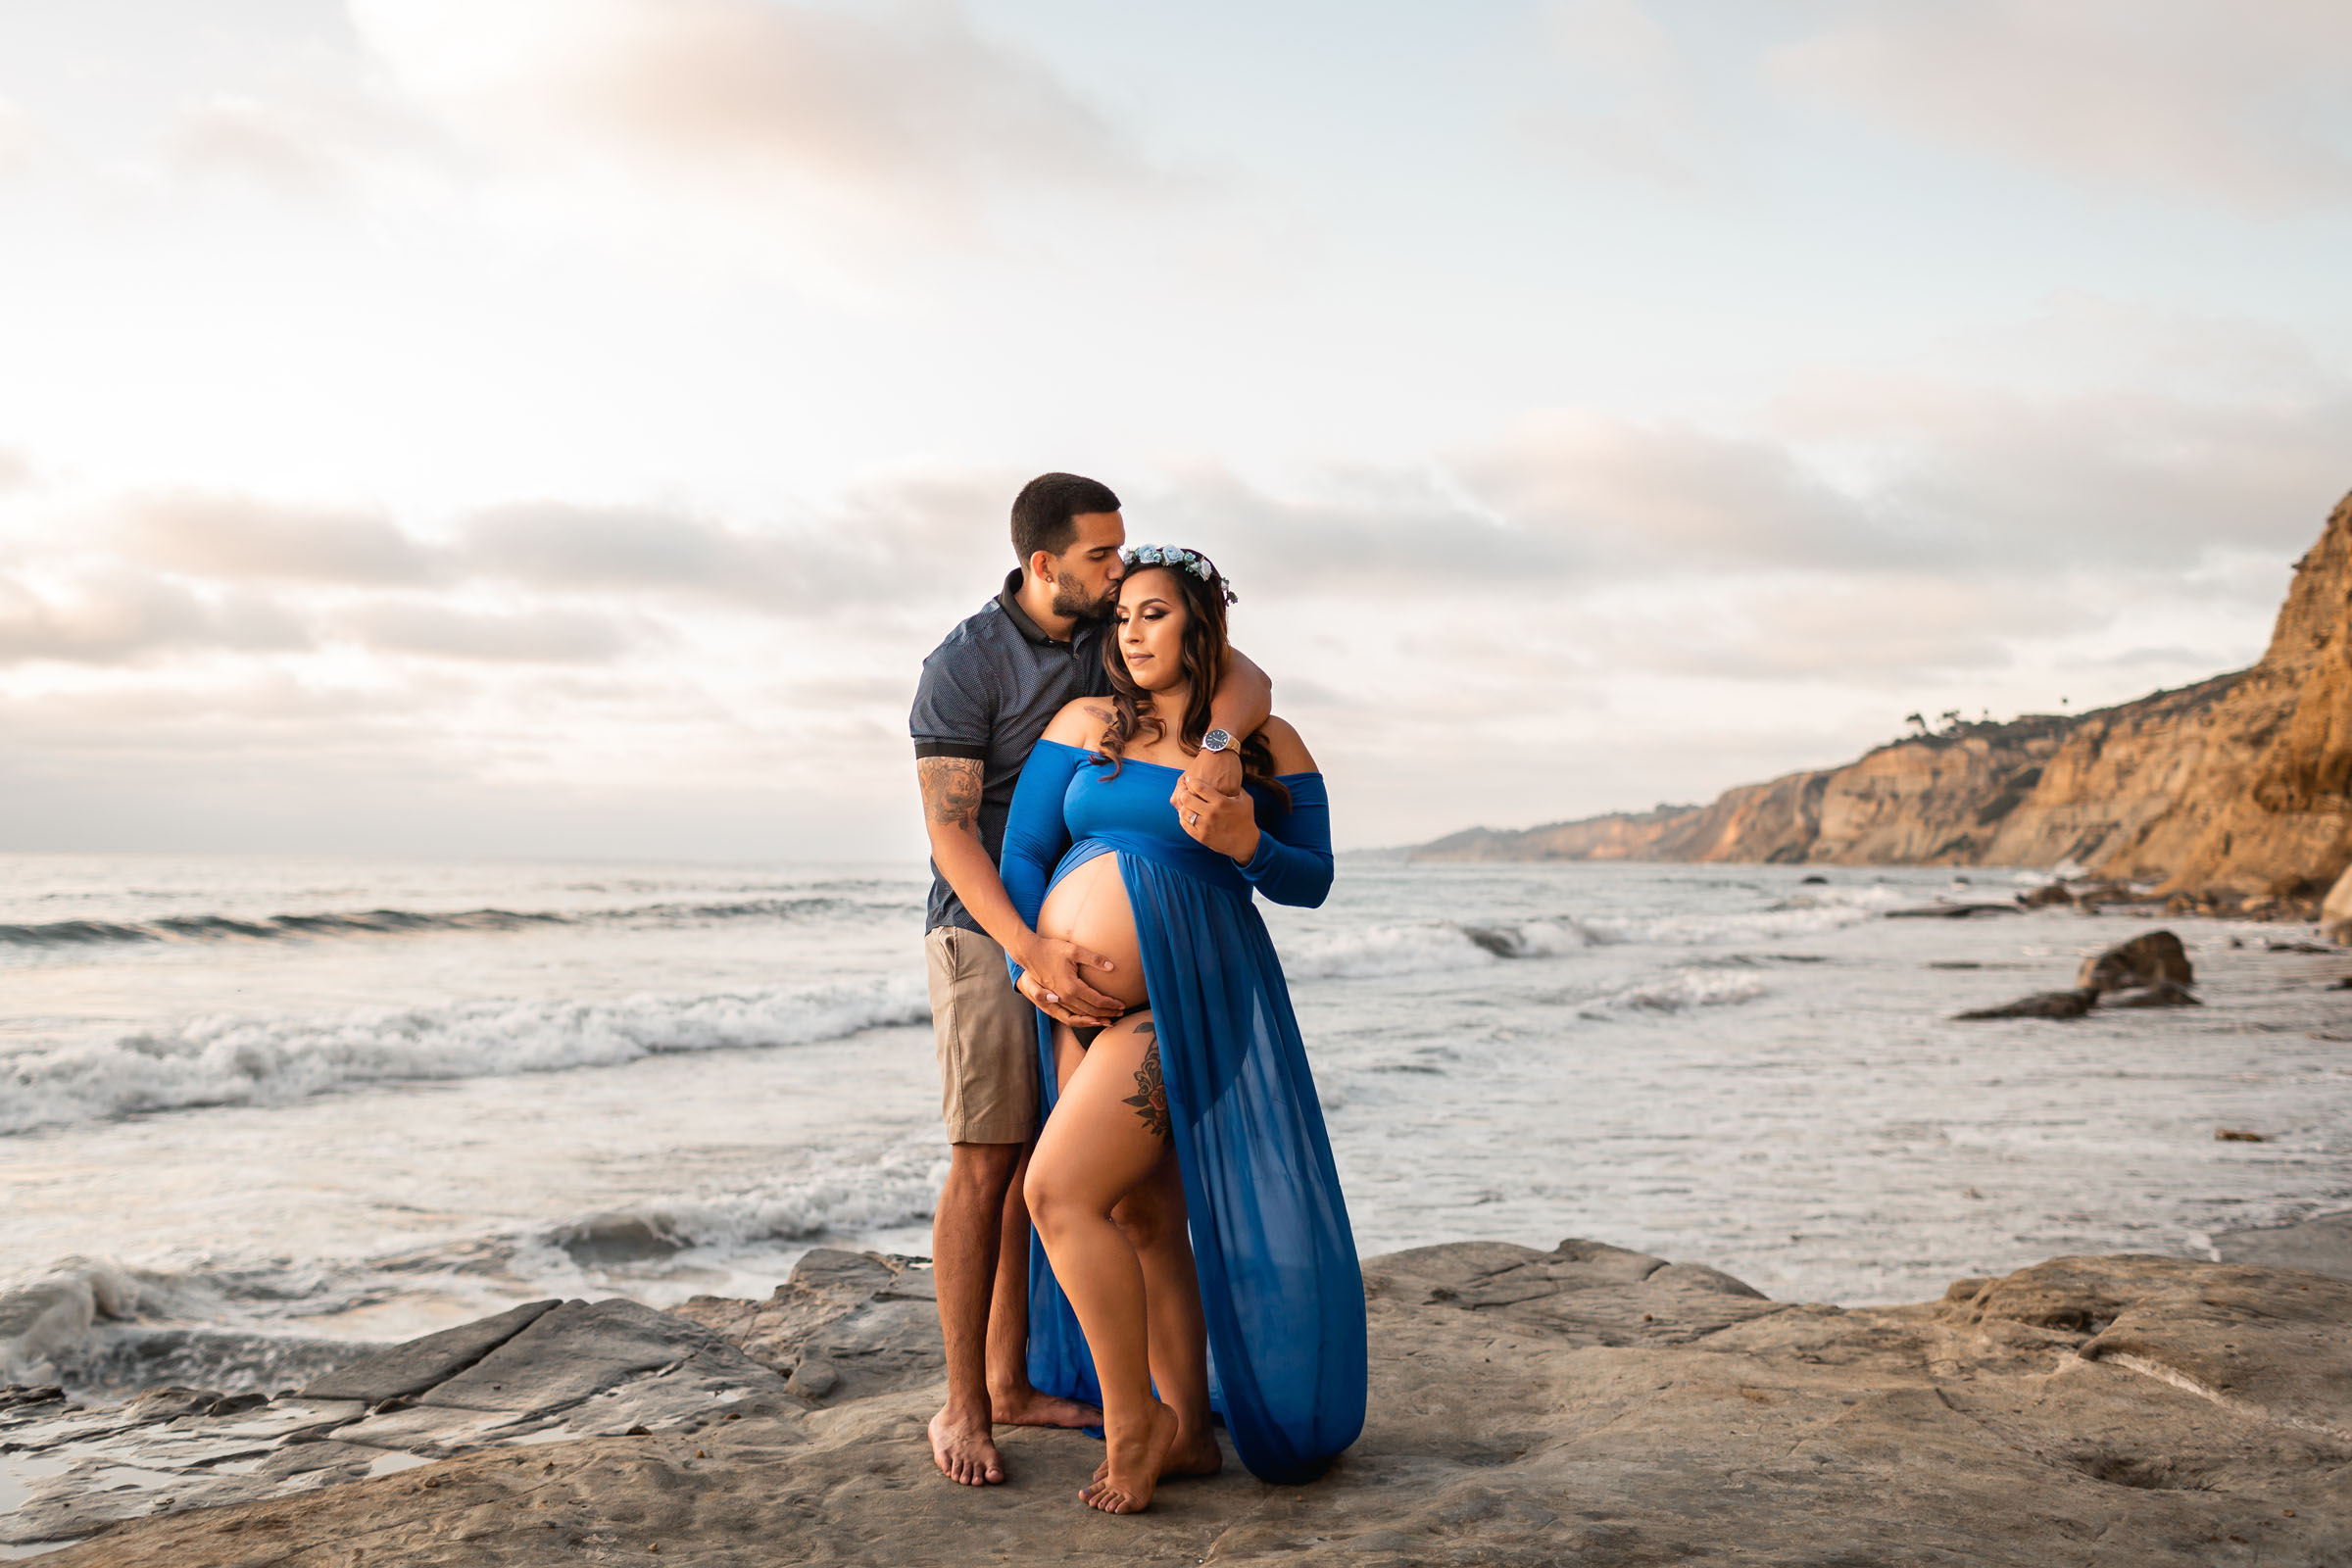 La Jolla Scripps Beach Maternity Pictures by Maternity Photographer Studio Freyja